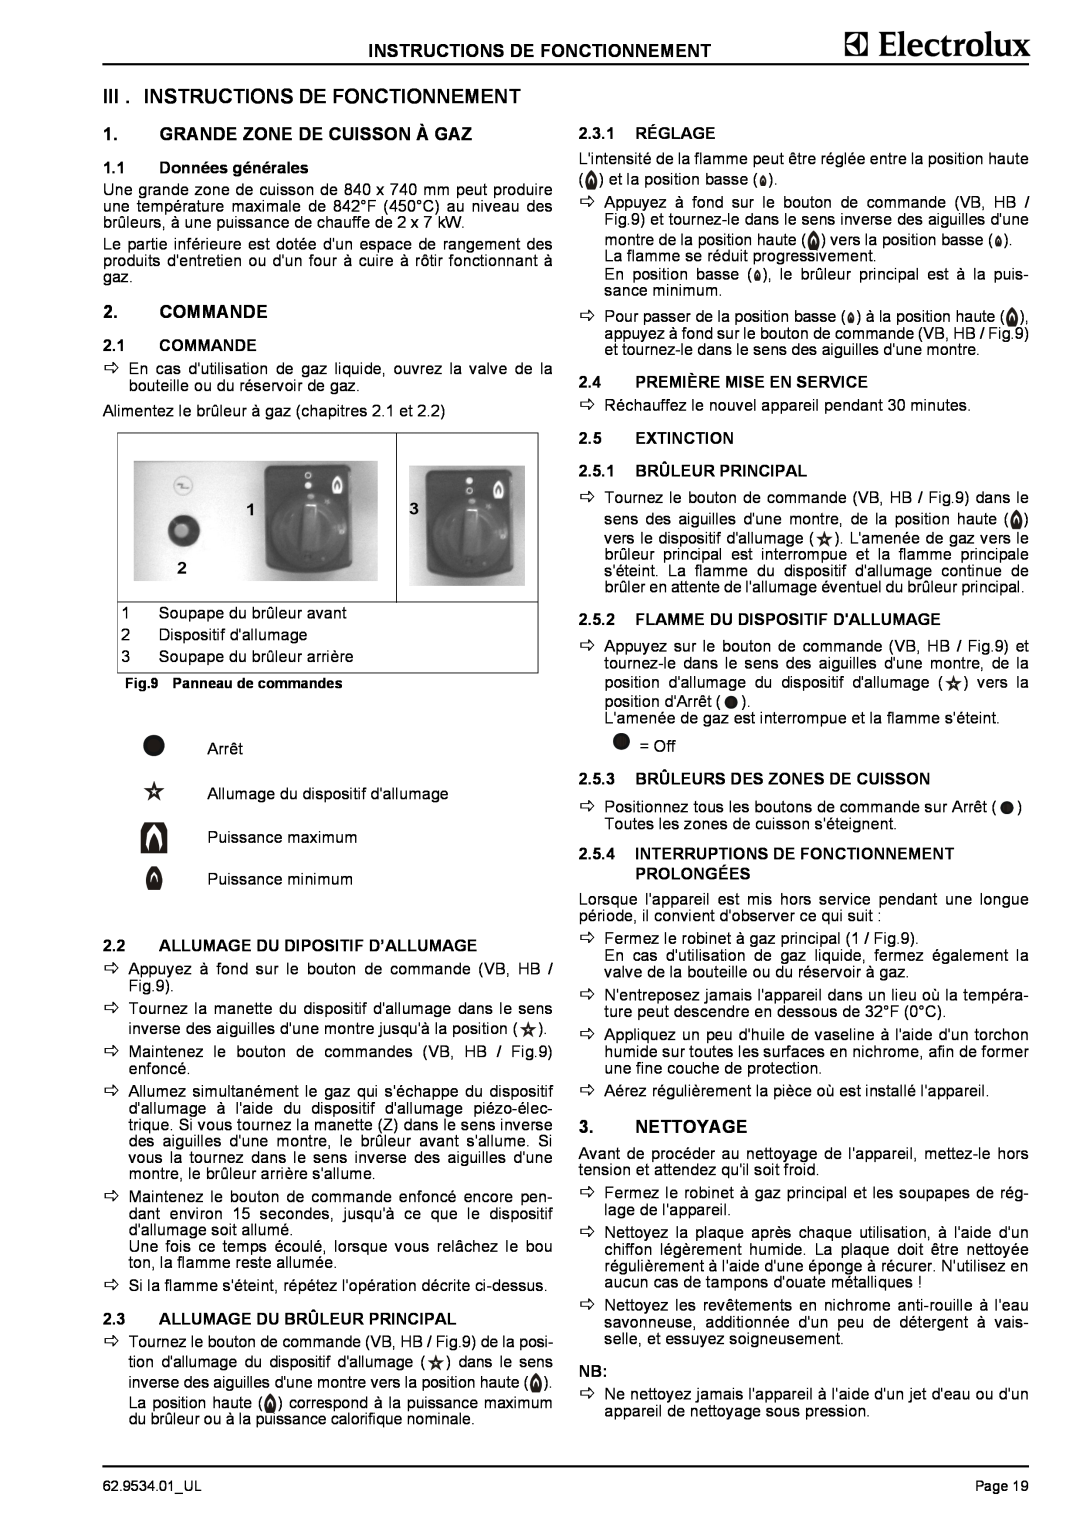 Electrolux 584166, WLGWAAOOOO manual Iii . Instructions De Fonctionnement, Grande Zone De Cuisson À Gaz, Commande, Nettoyage 